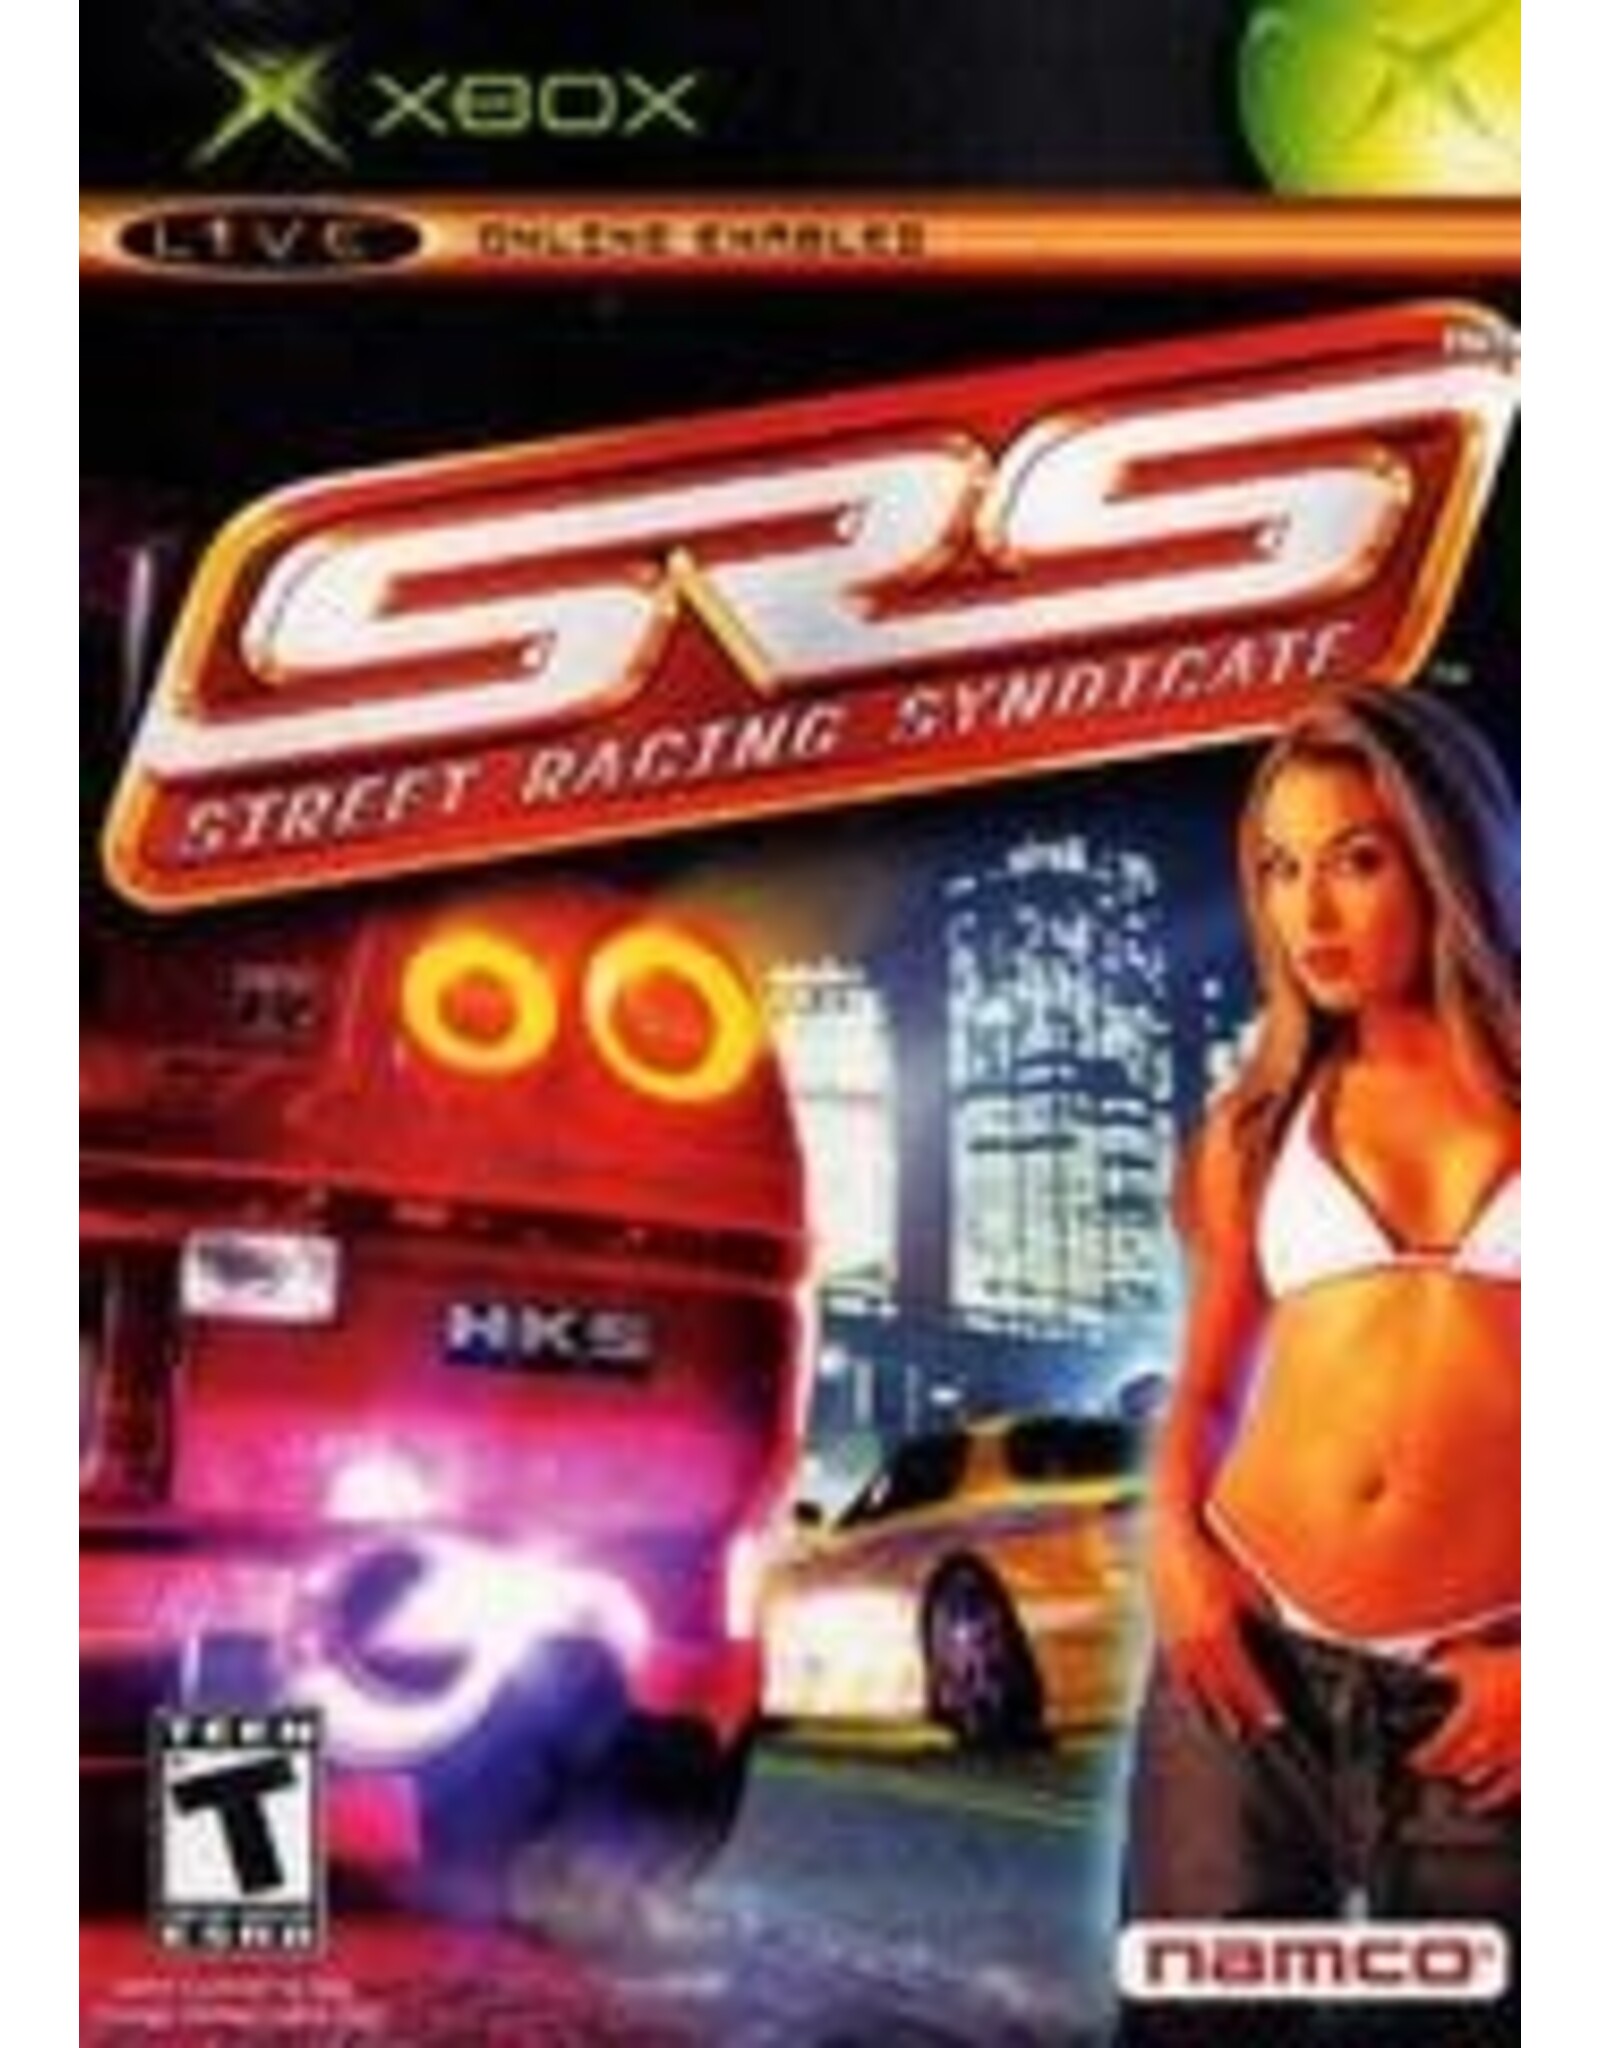 Xbox Street Racing Syndicate (CiB, Heavily Damaged Sleeve)